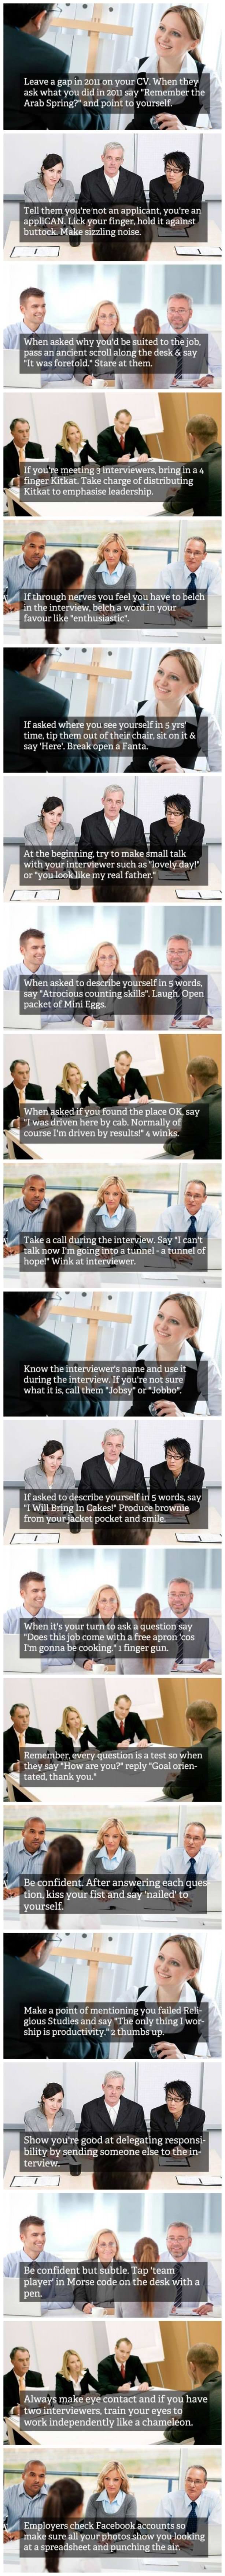 Job Interview Pro Tips